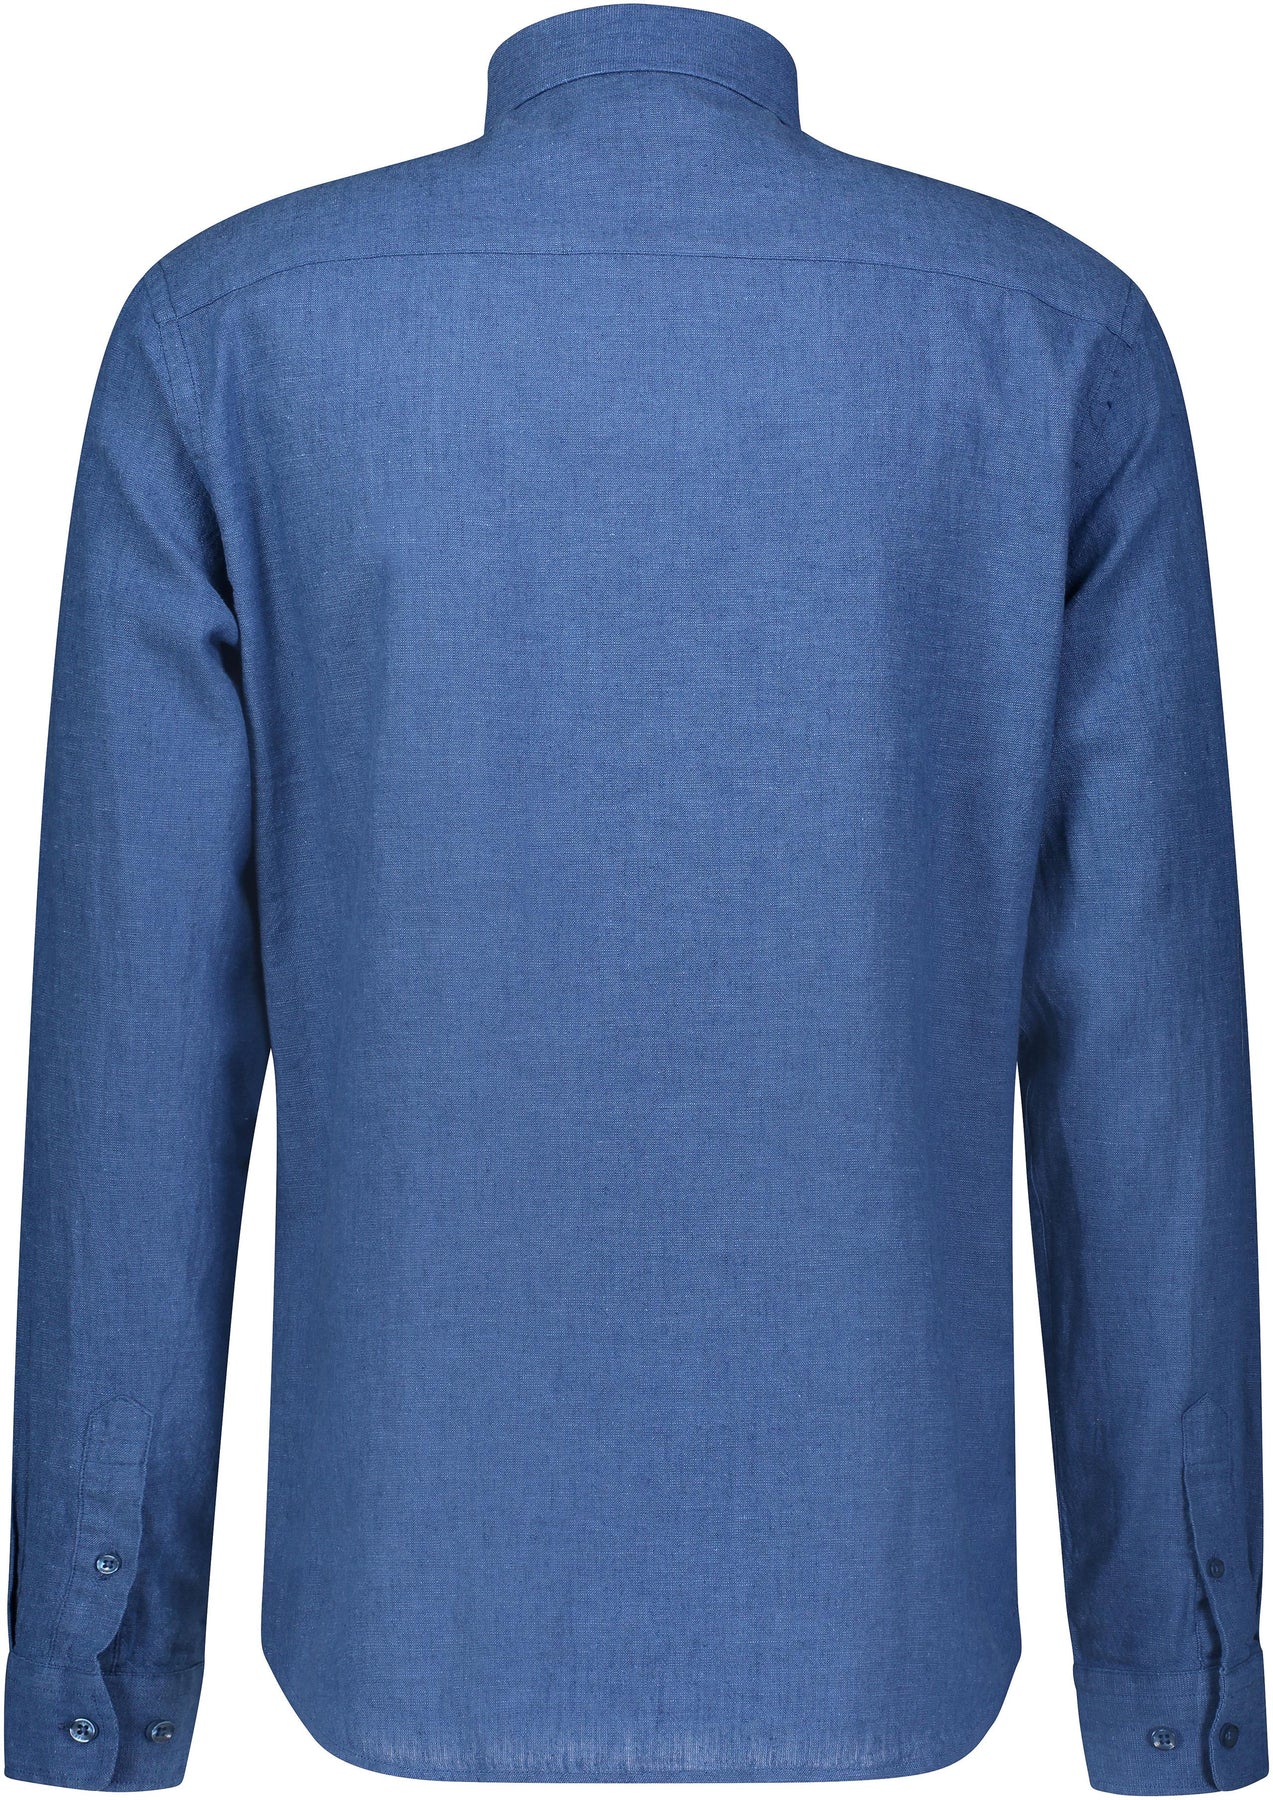 Declan Shirt - Mid Blue Melange